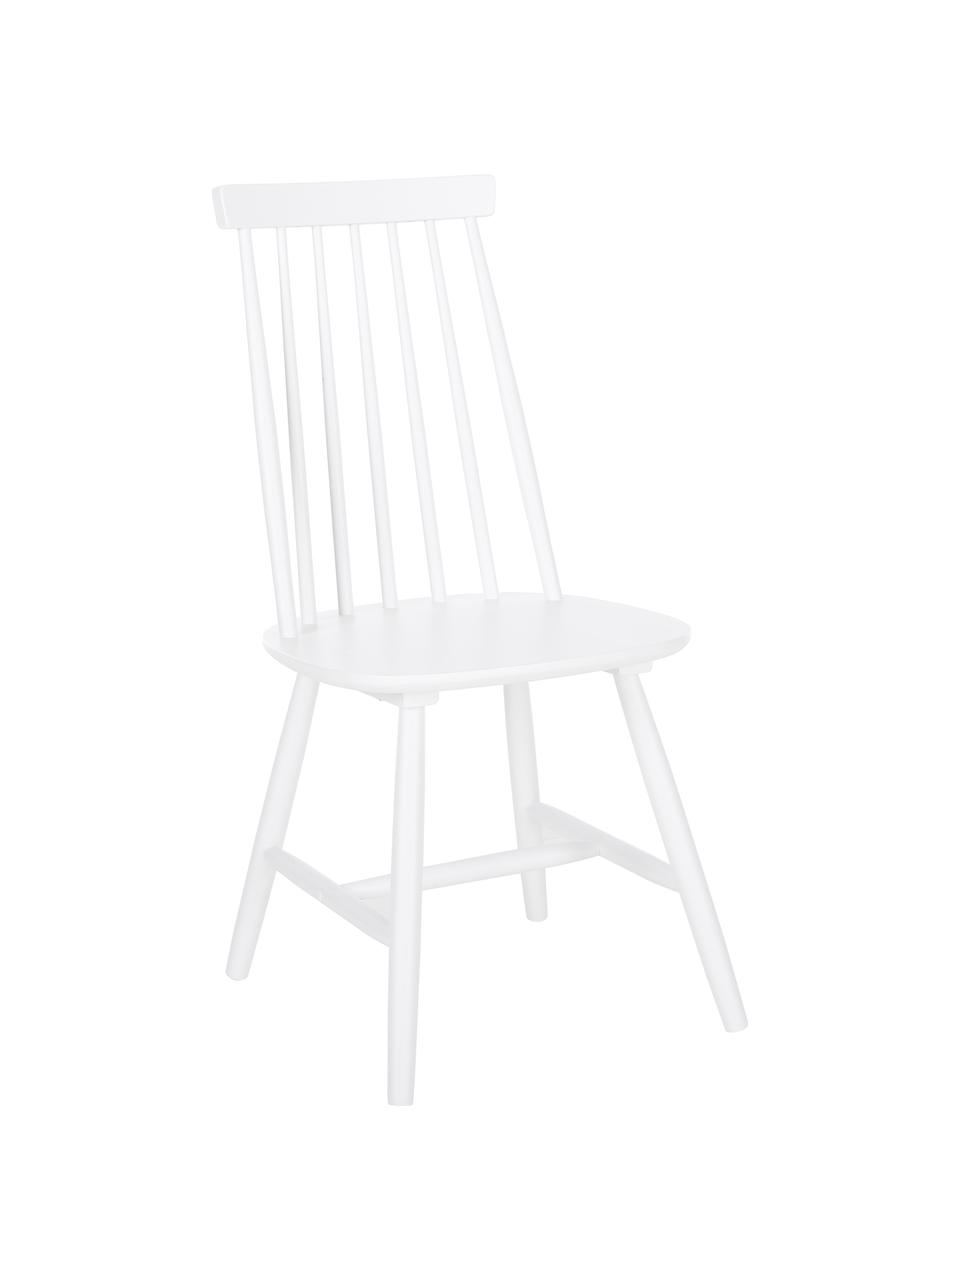 Windsor-Holzstühle Milas in Weiss, 2 Stück, Kautschuckholz, lackiert, Weiss, B 52 x T 45 cm